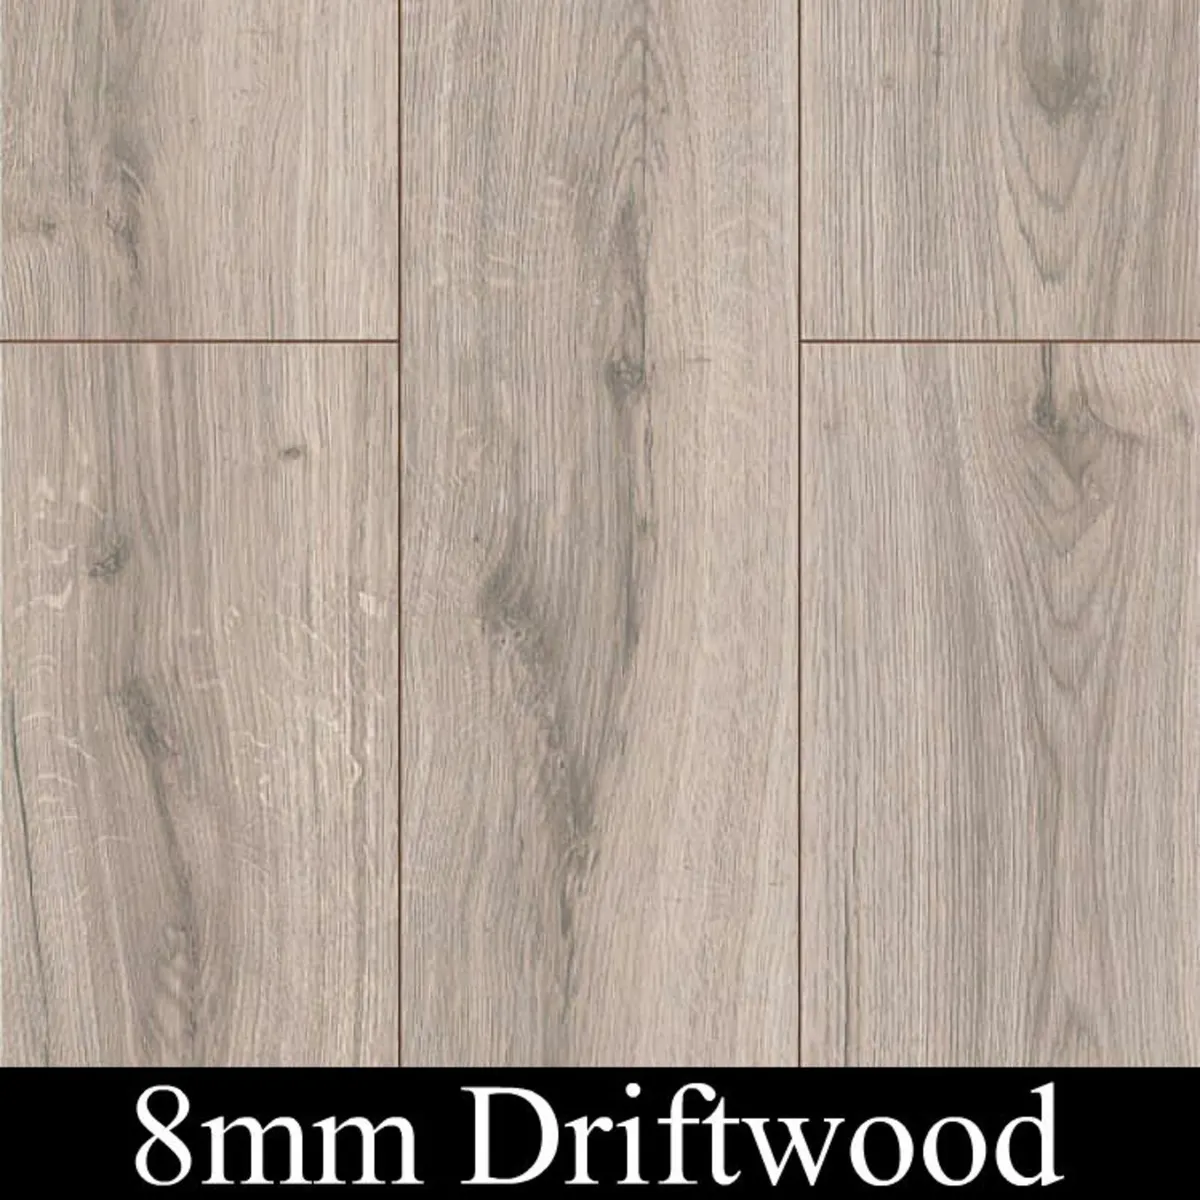 Driftwood click flooring - Image 1